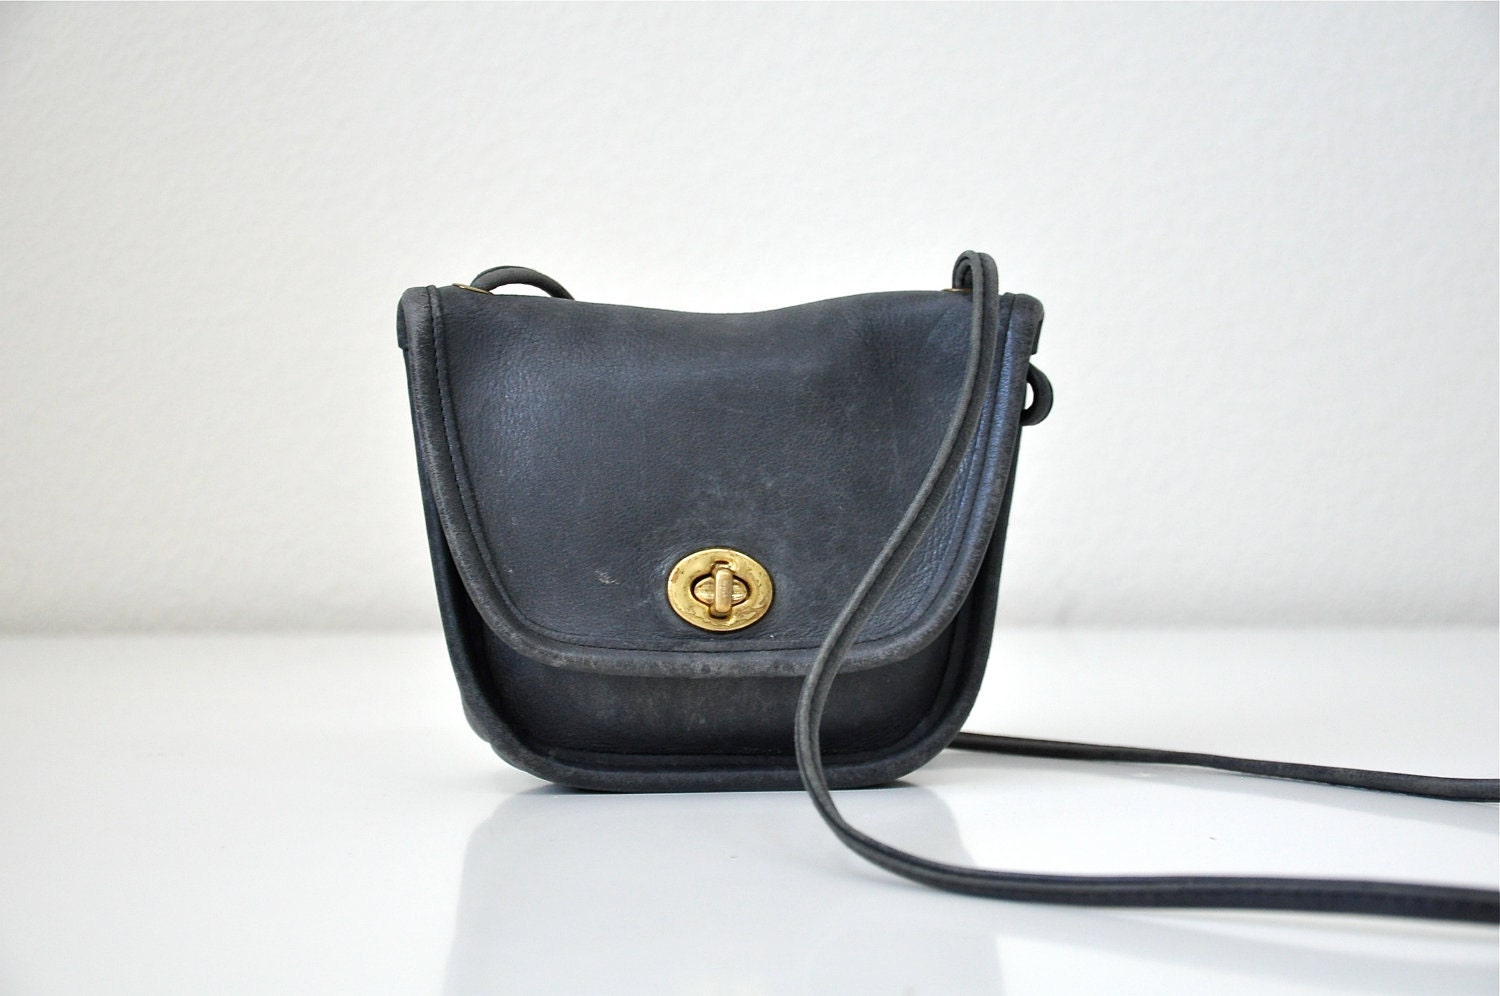 Vintage COACH Mini Handbag by LITTLETUNA on Etsy